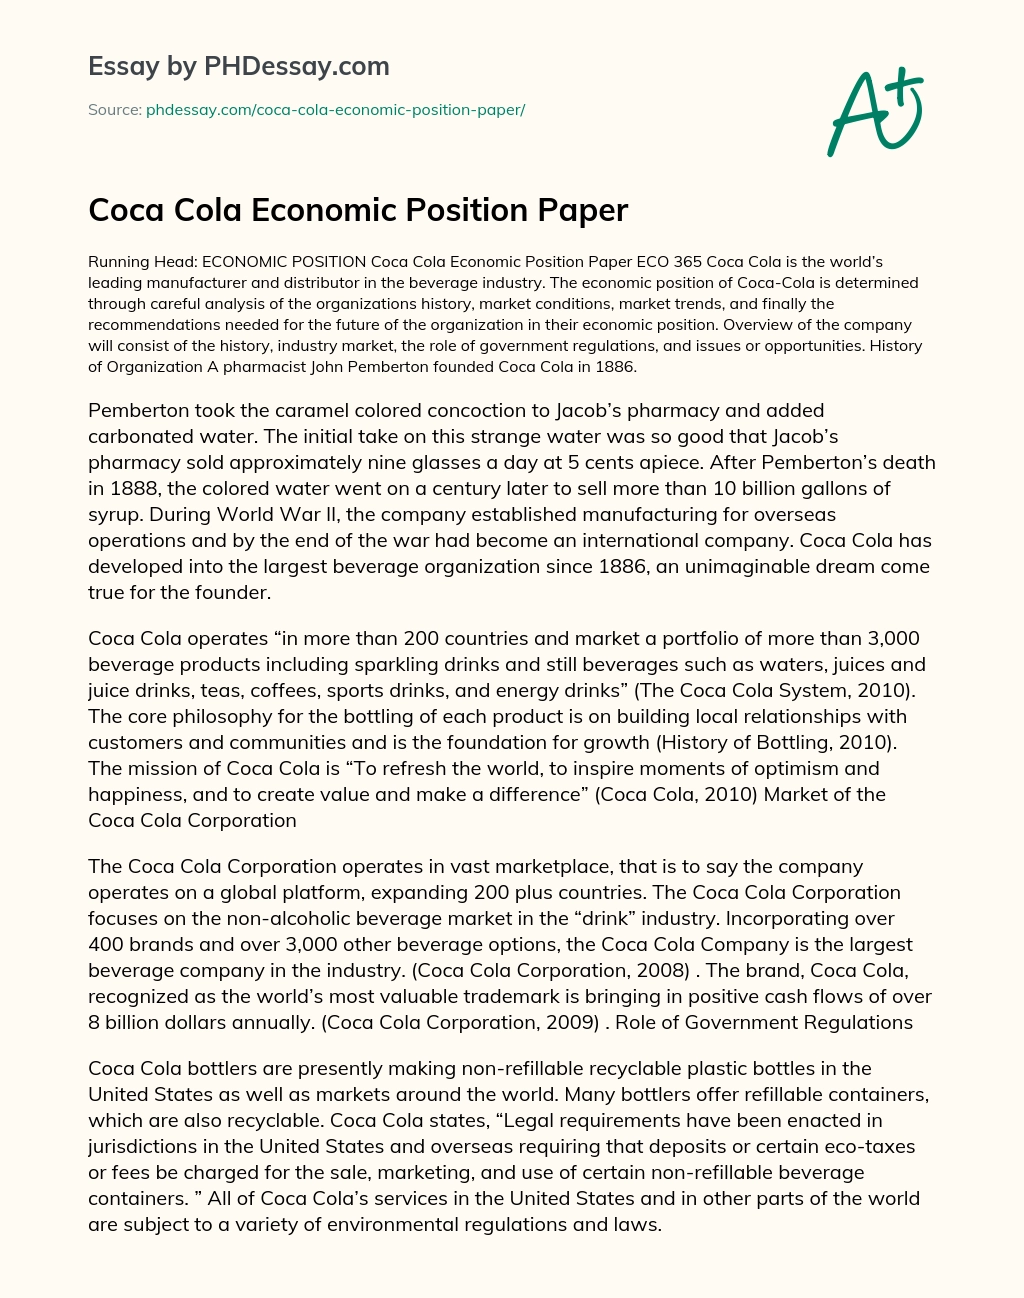 Coca Cola Economic Position Paper essay